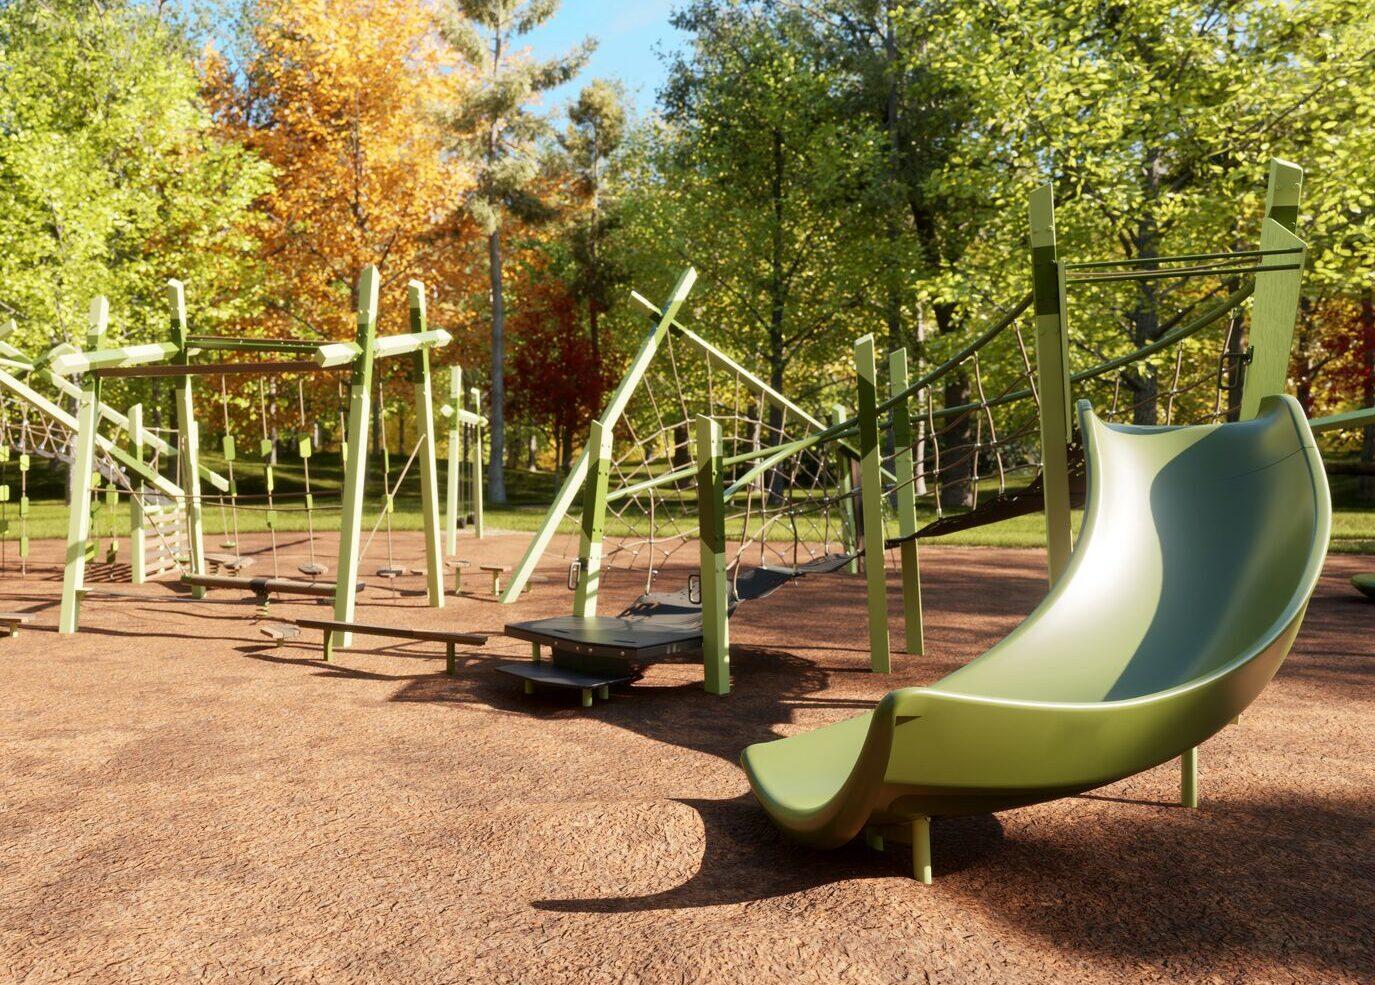 Angular brown and green playground on wood fibre surfacing